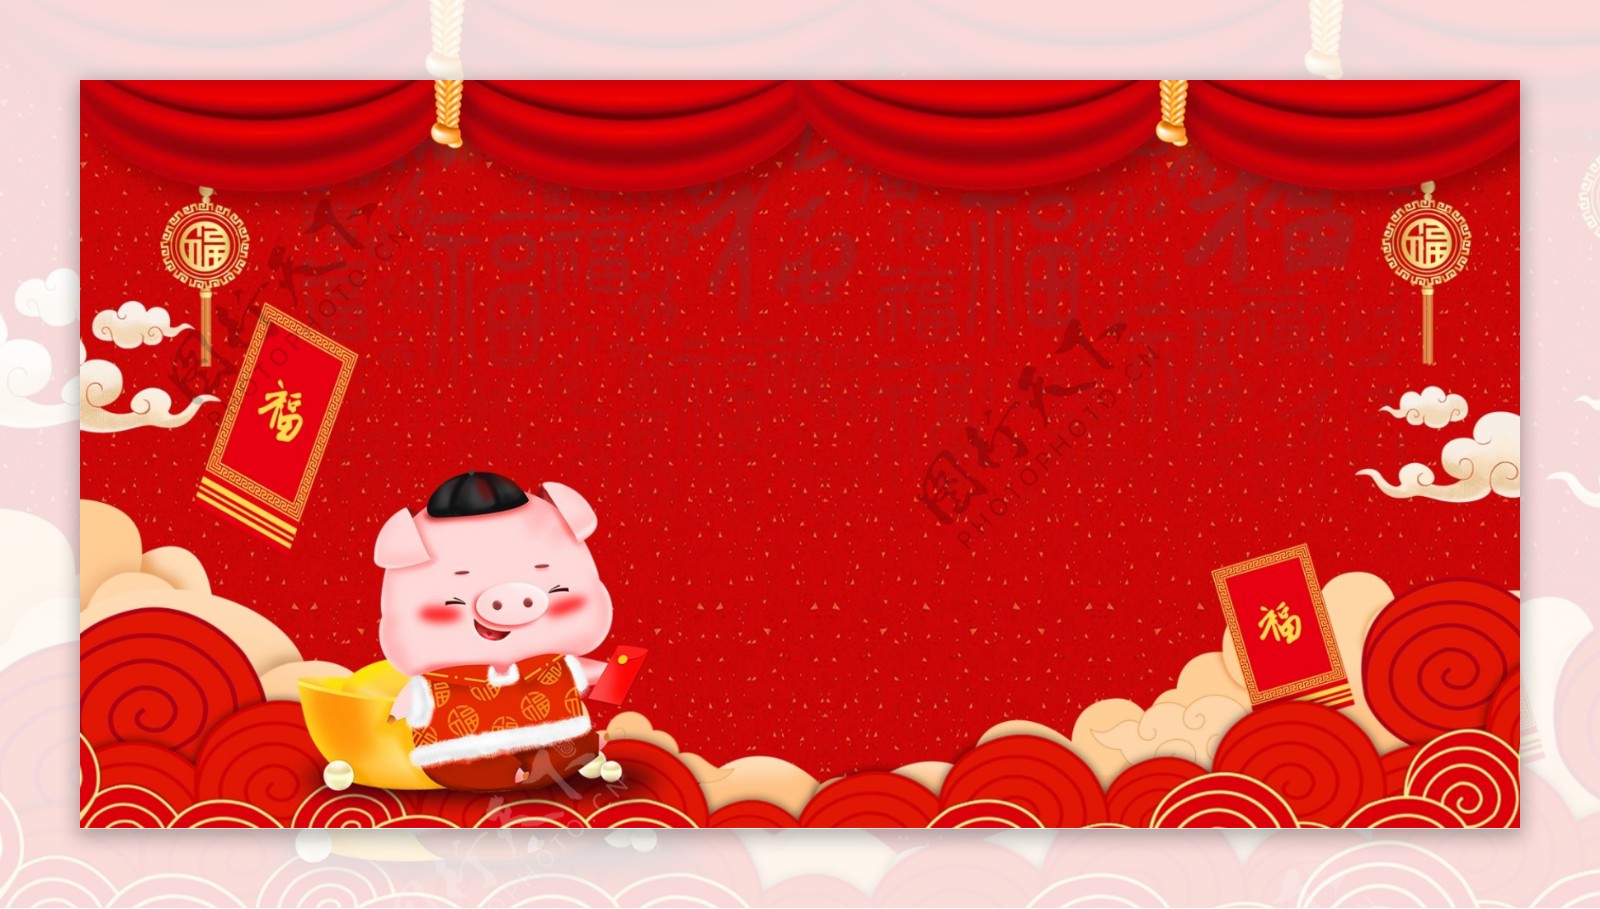 猪年年货节中国风红包banner海报